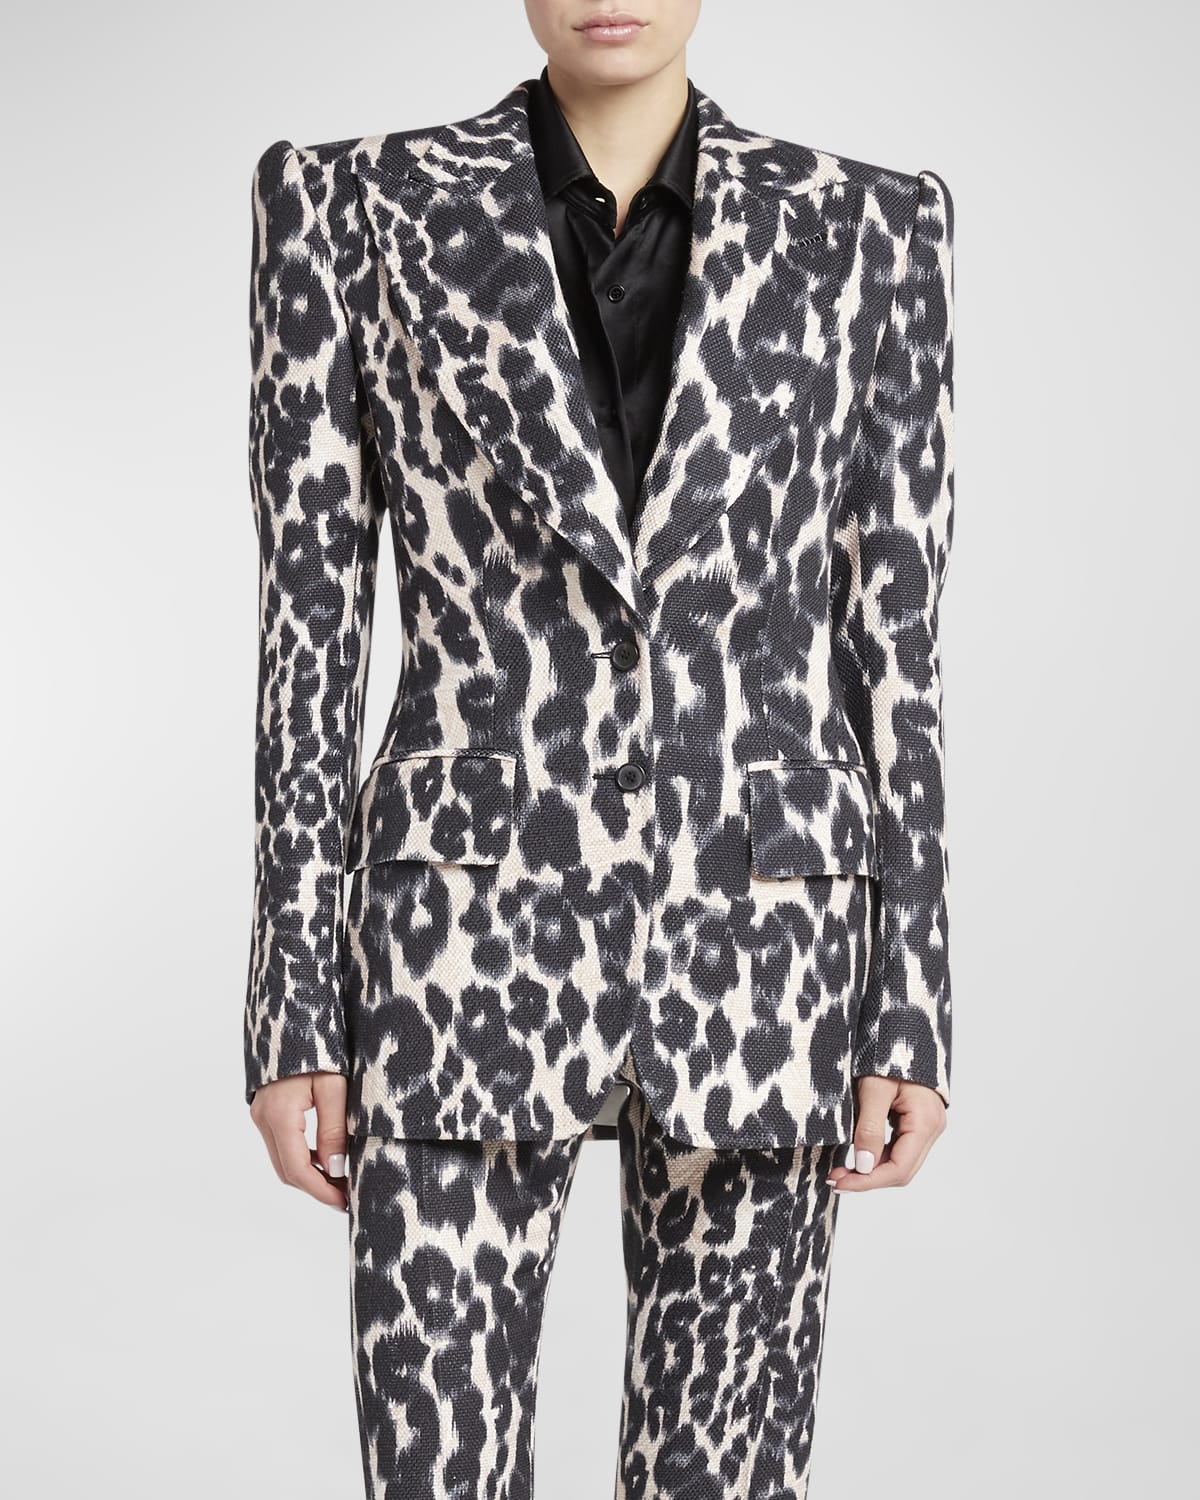 Leopard Print Jacket | Neiman Marcus